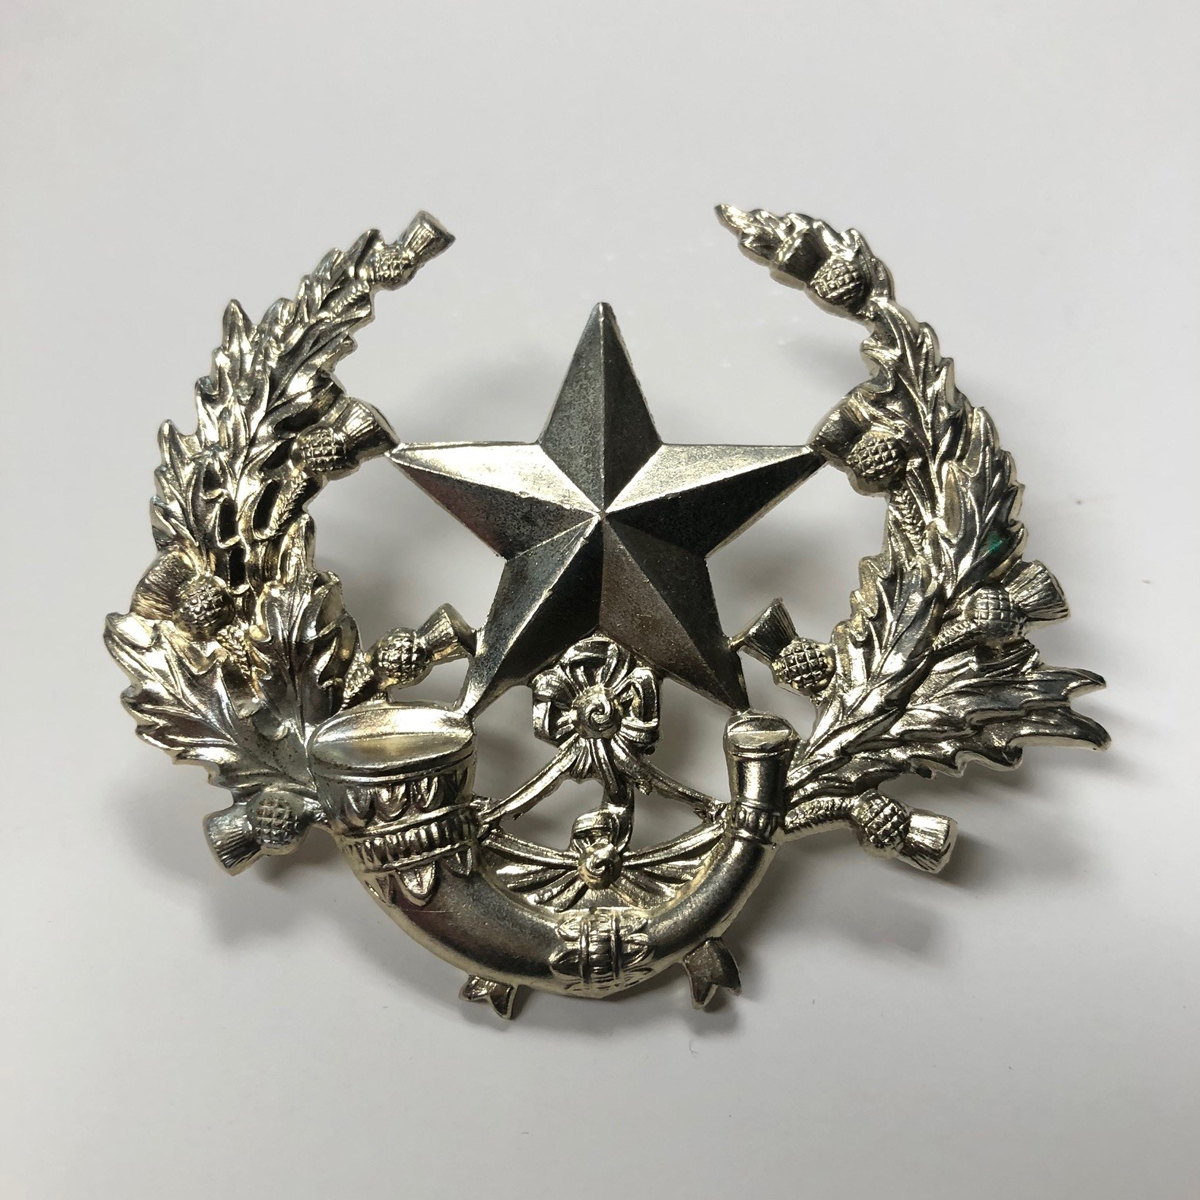 Regimental cap badge